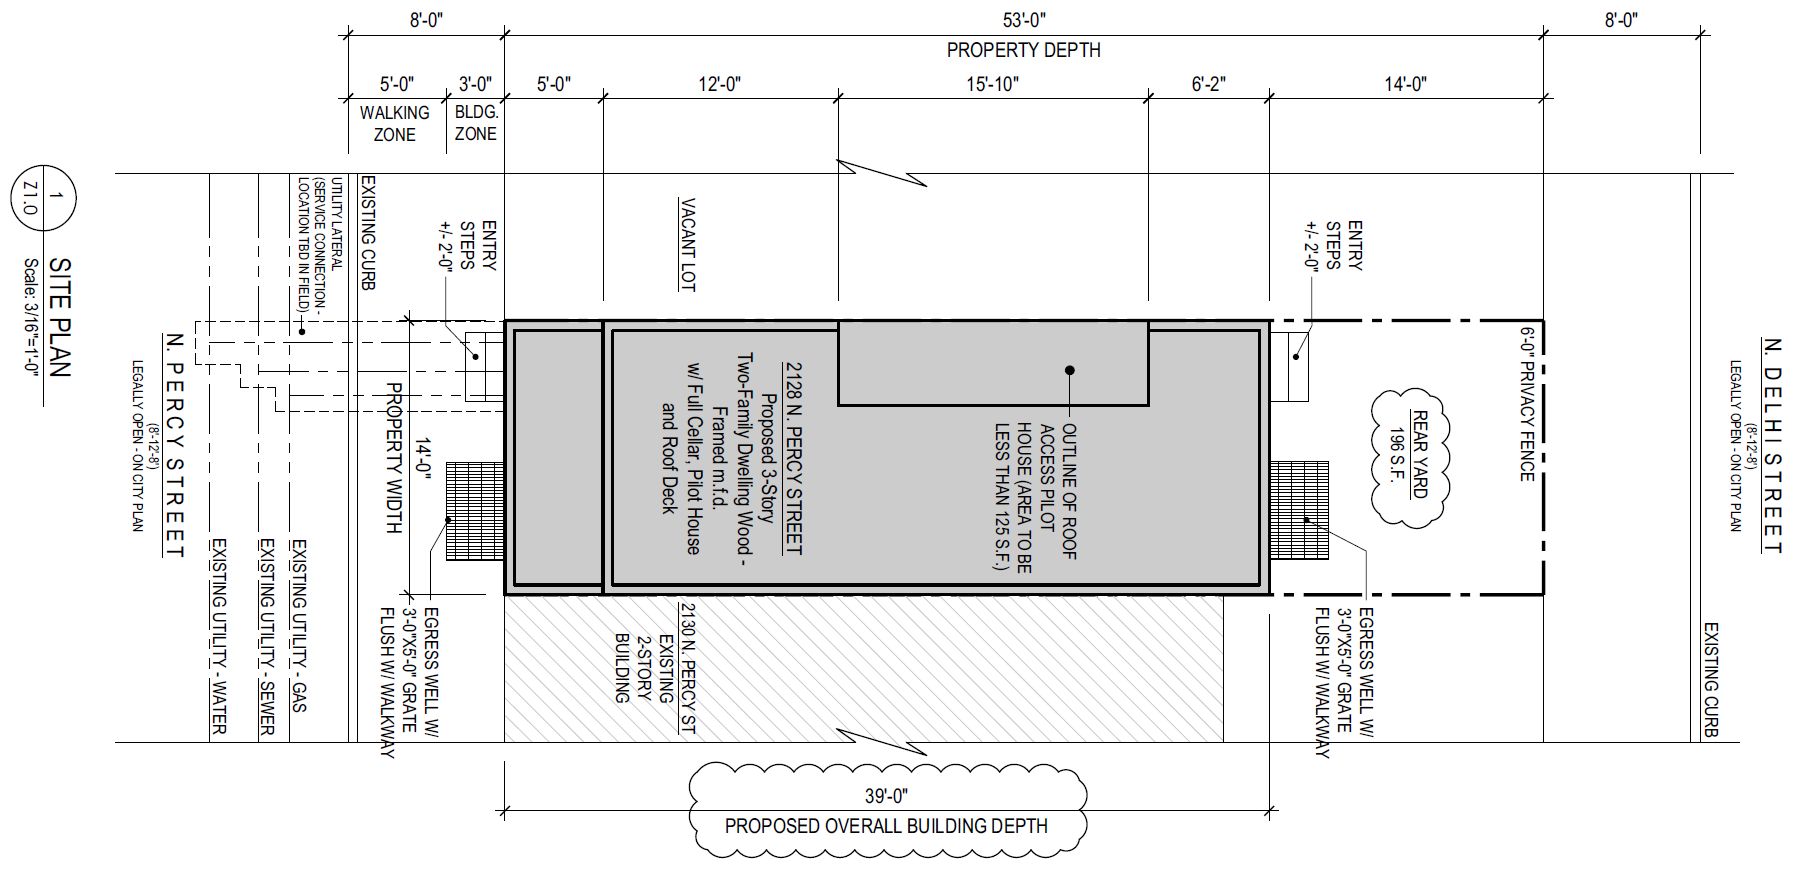 2128 North Percy Street. Site plan. Credit: 24/7 Design Group via the City of Philadelphia